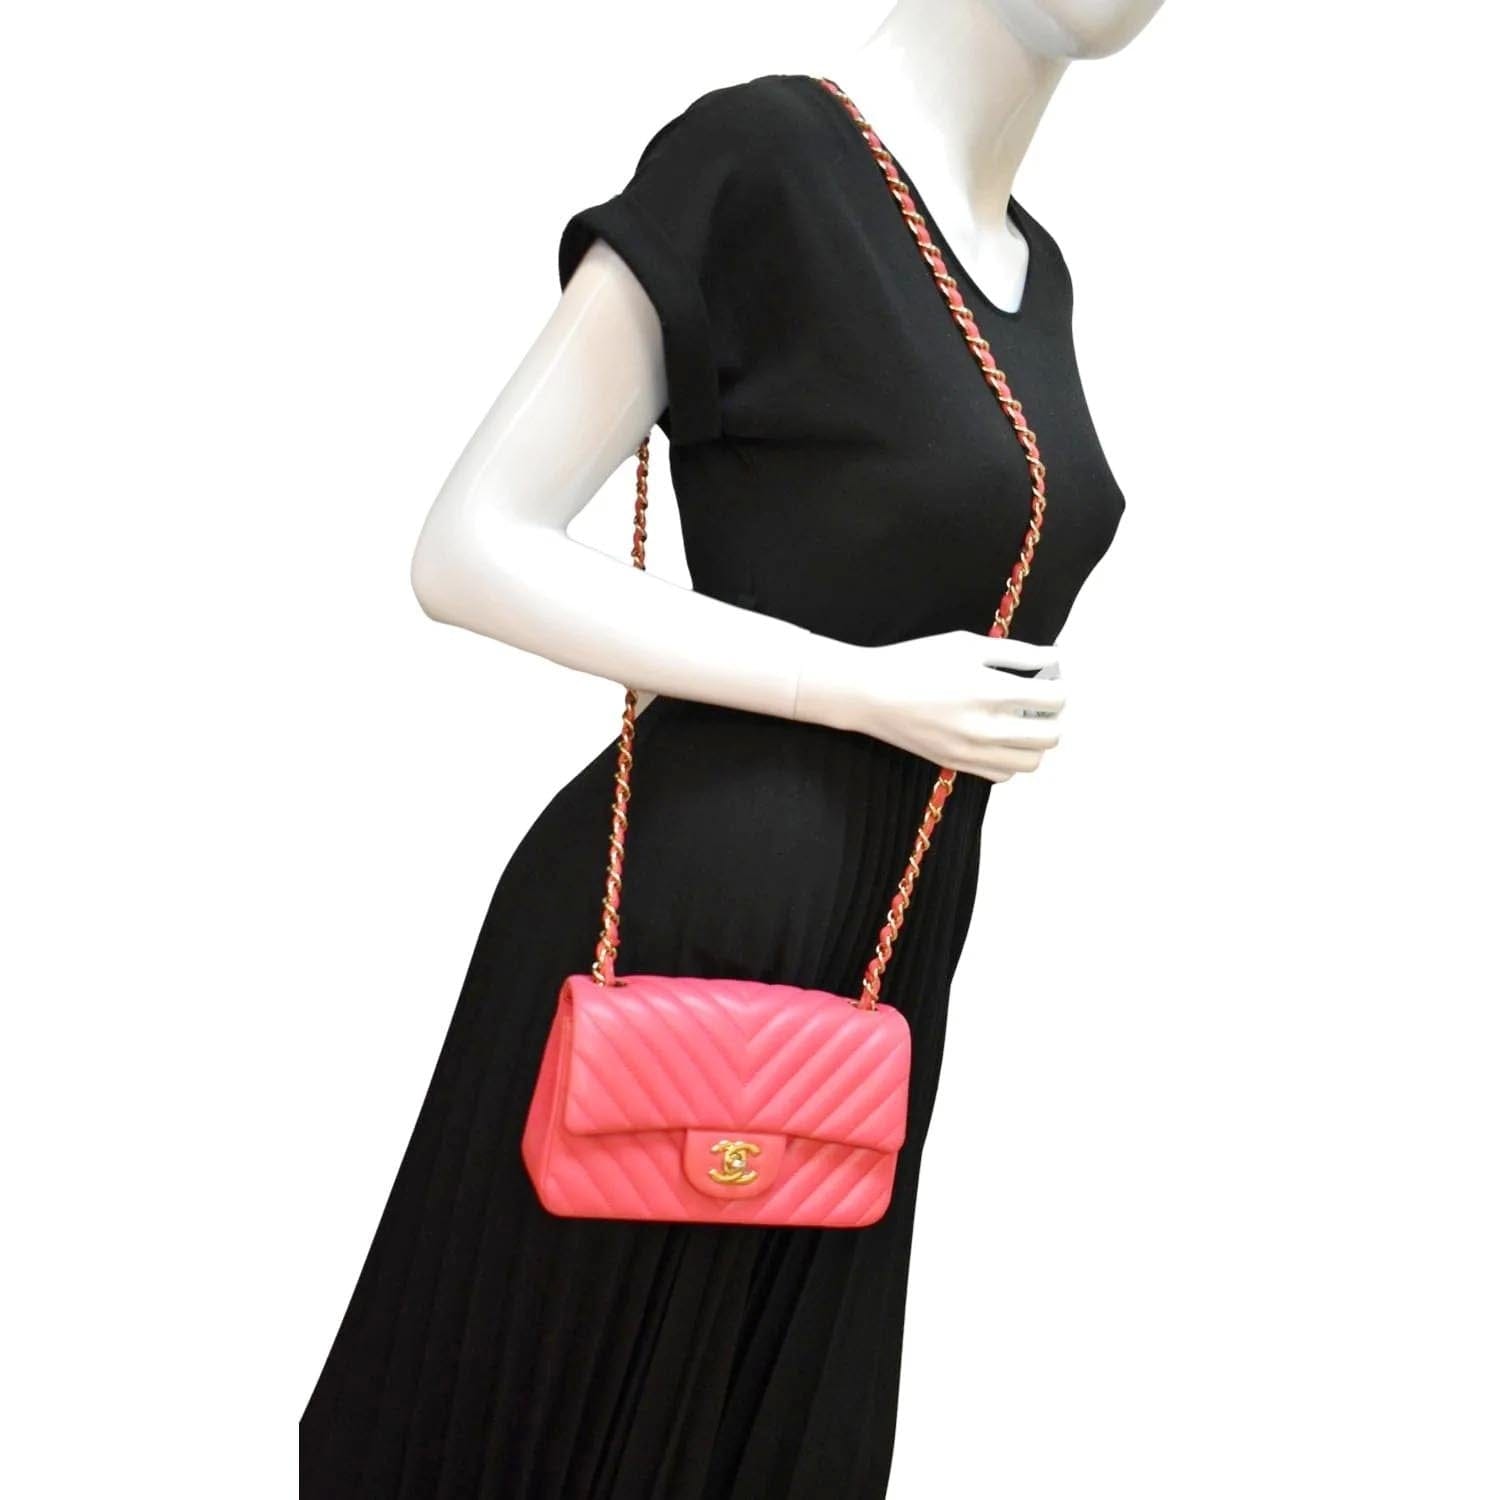 Chanel Classic Timeless in Black Matelassé Leather Shoulder Bag